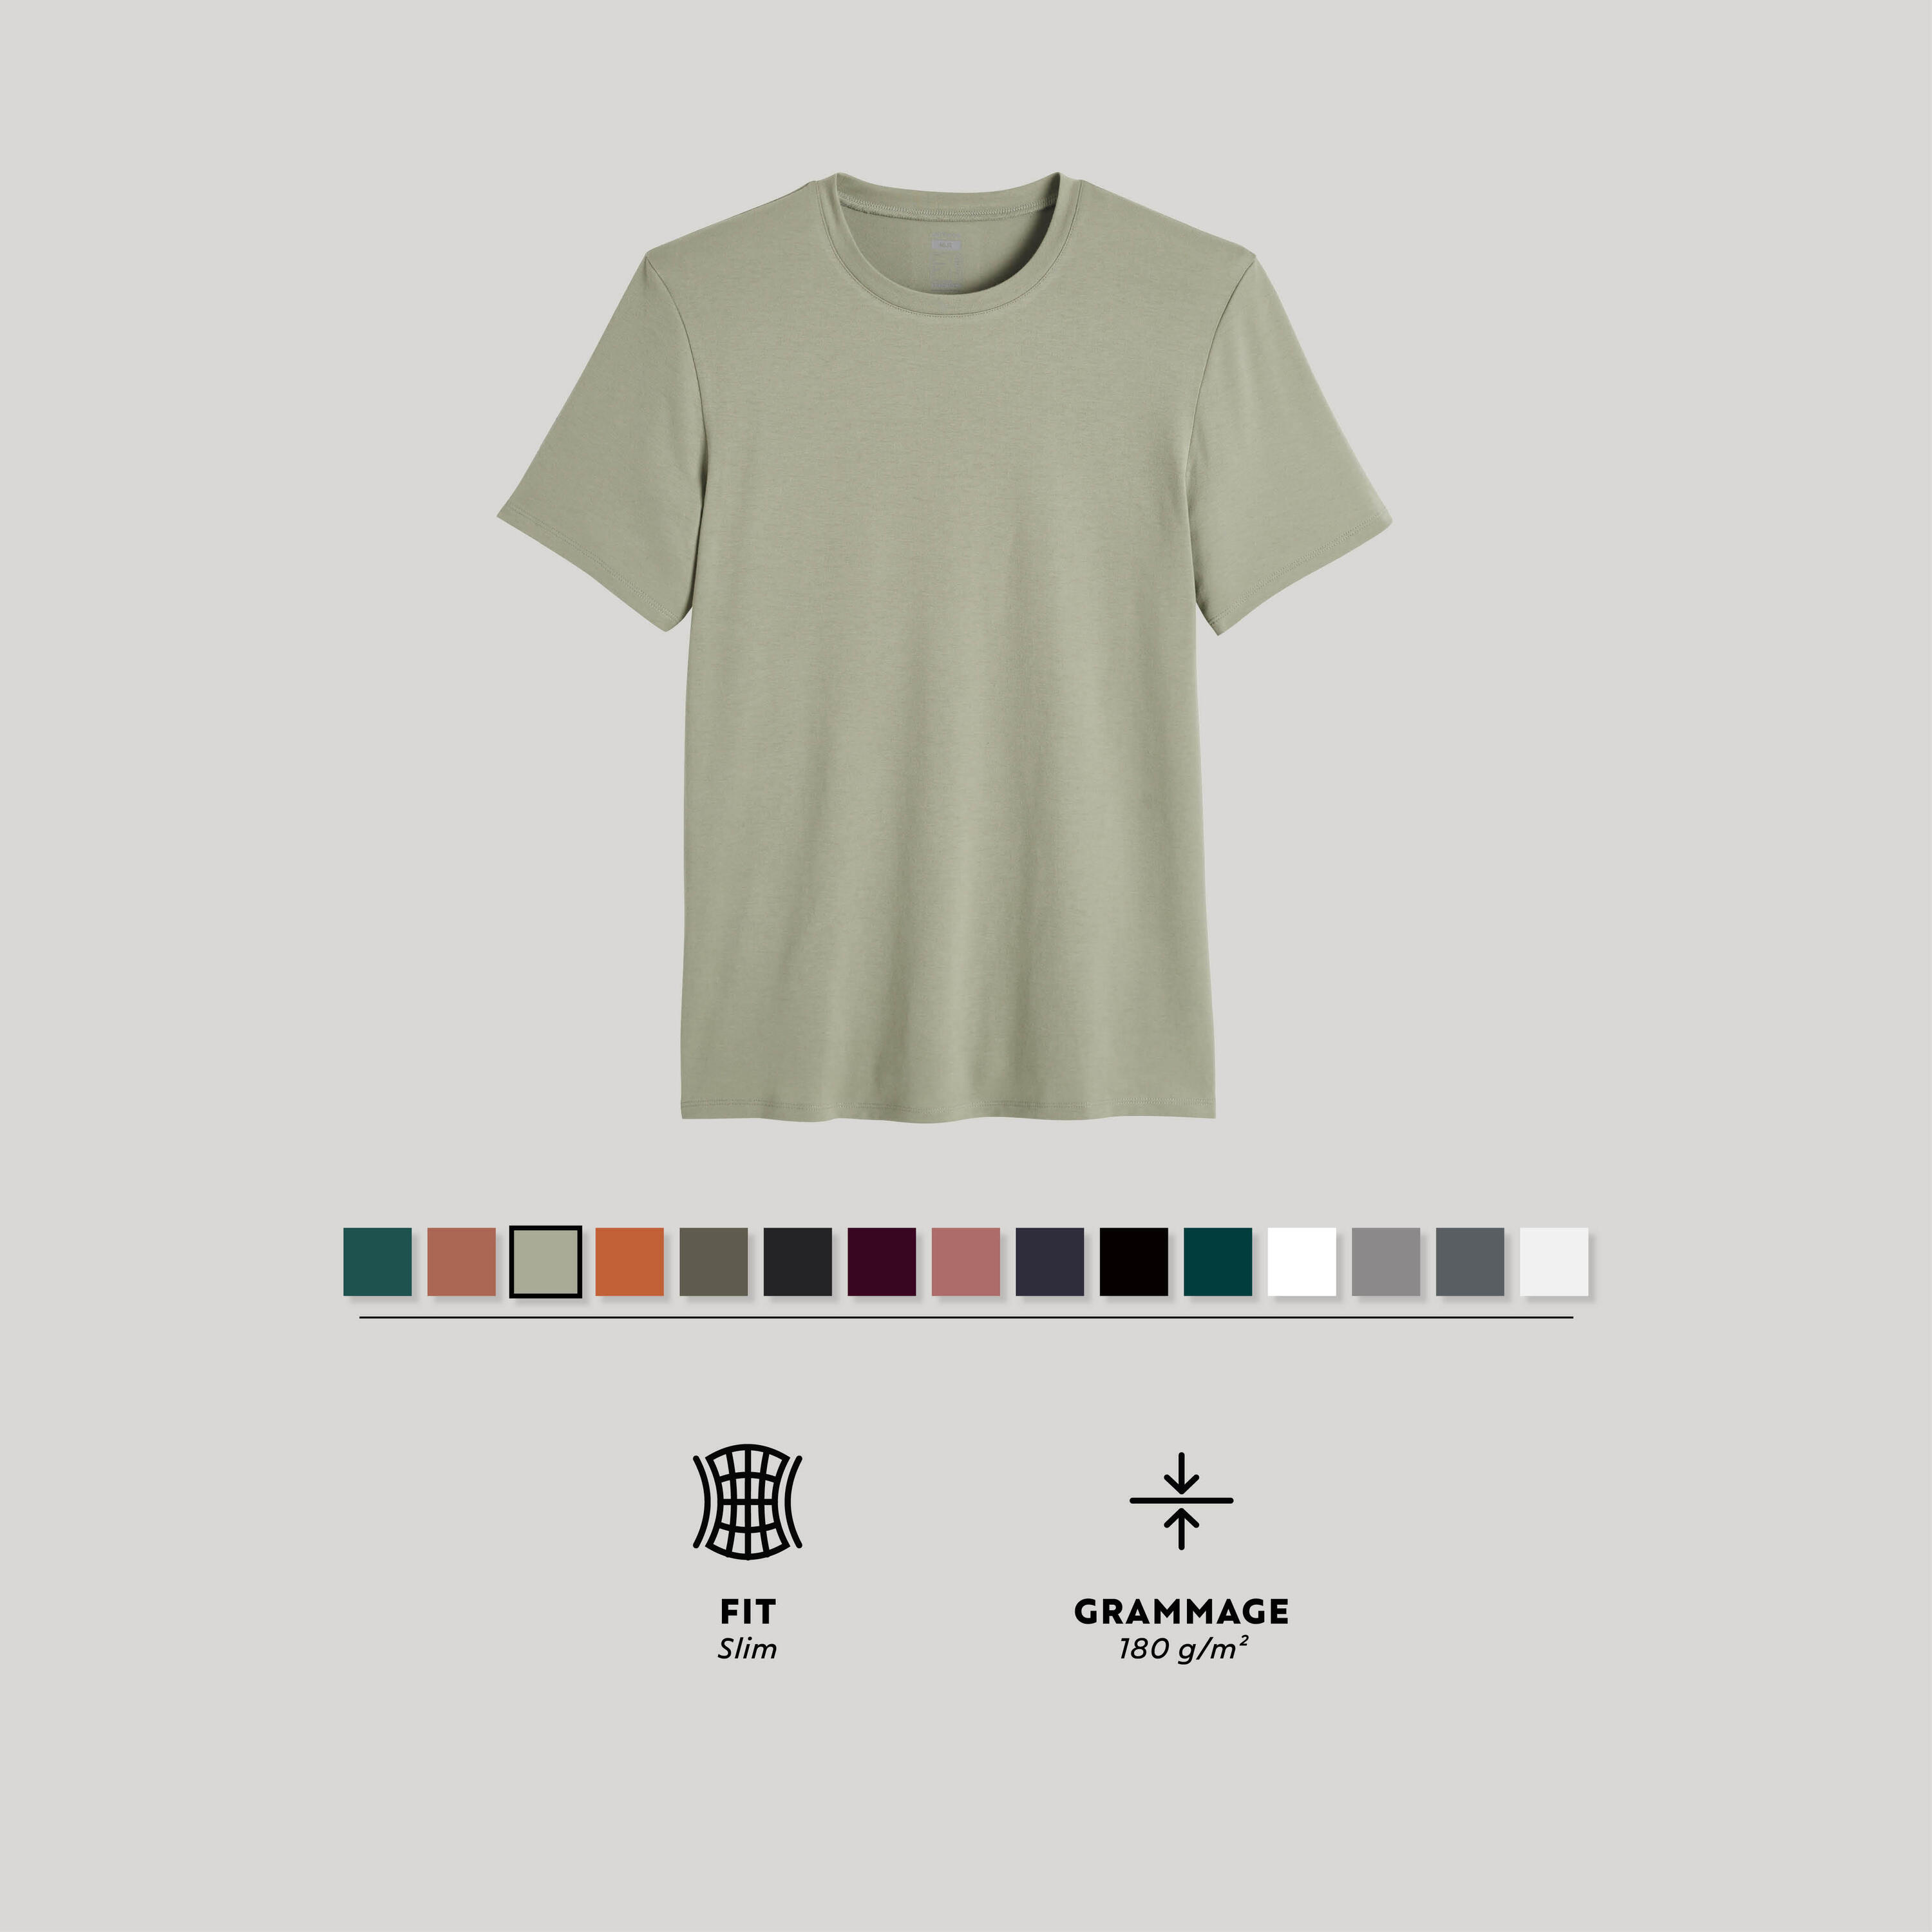 DOMYOS Men's Slim-Fit Fitness T-Shirt 500 - Sage Grey